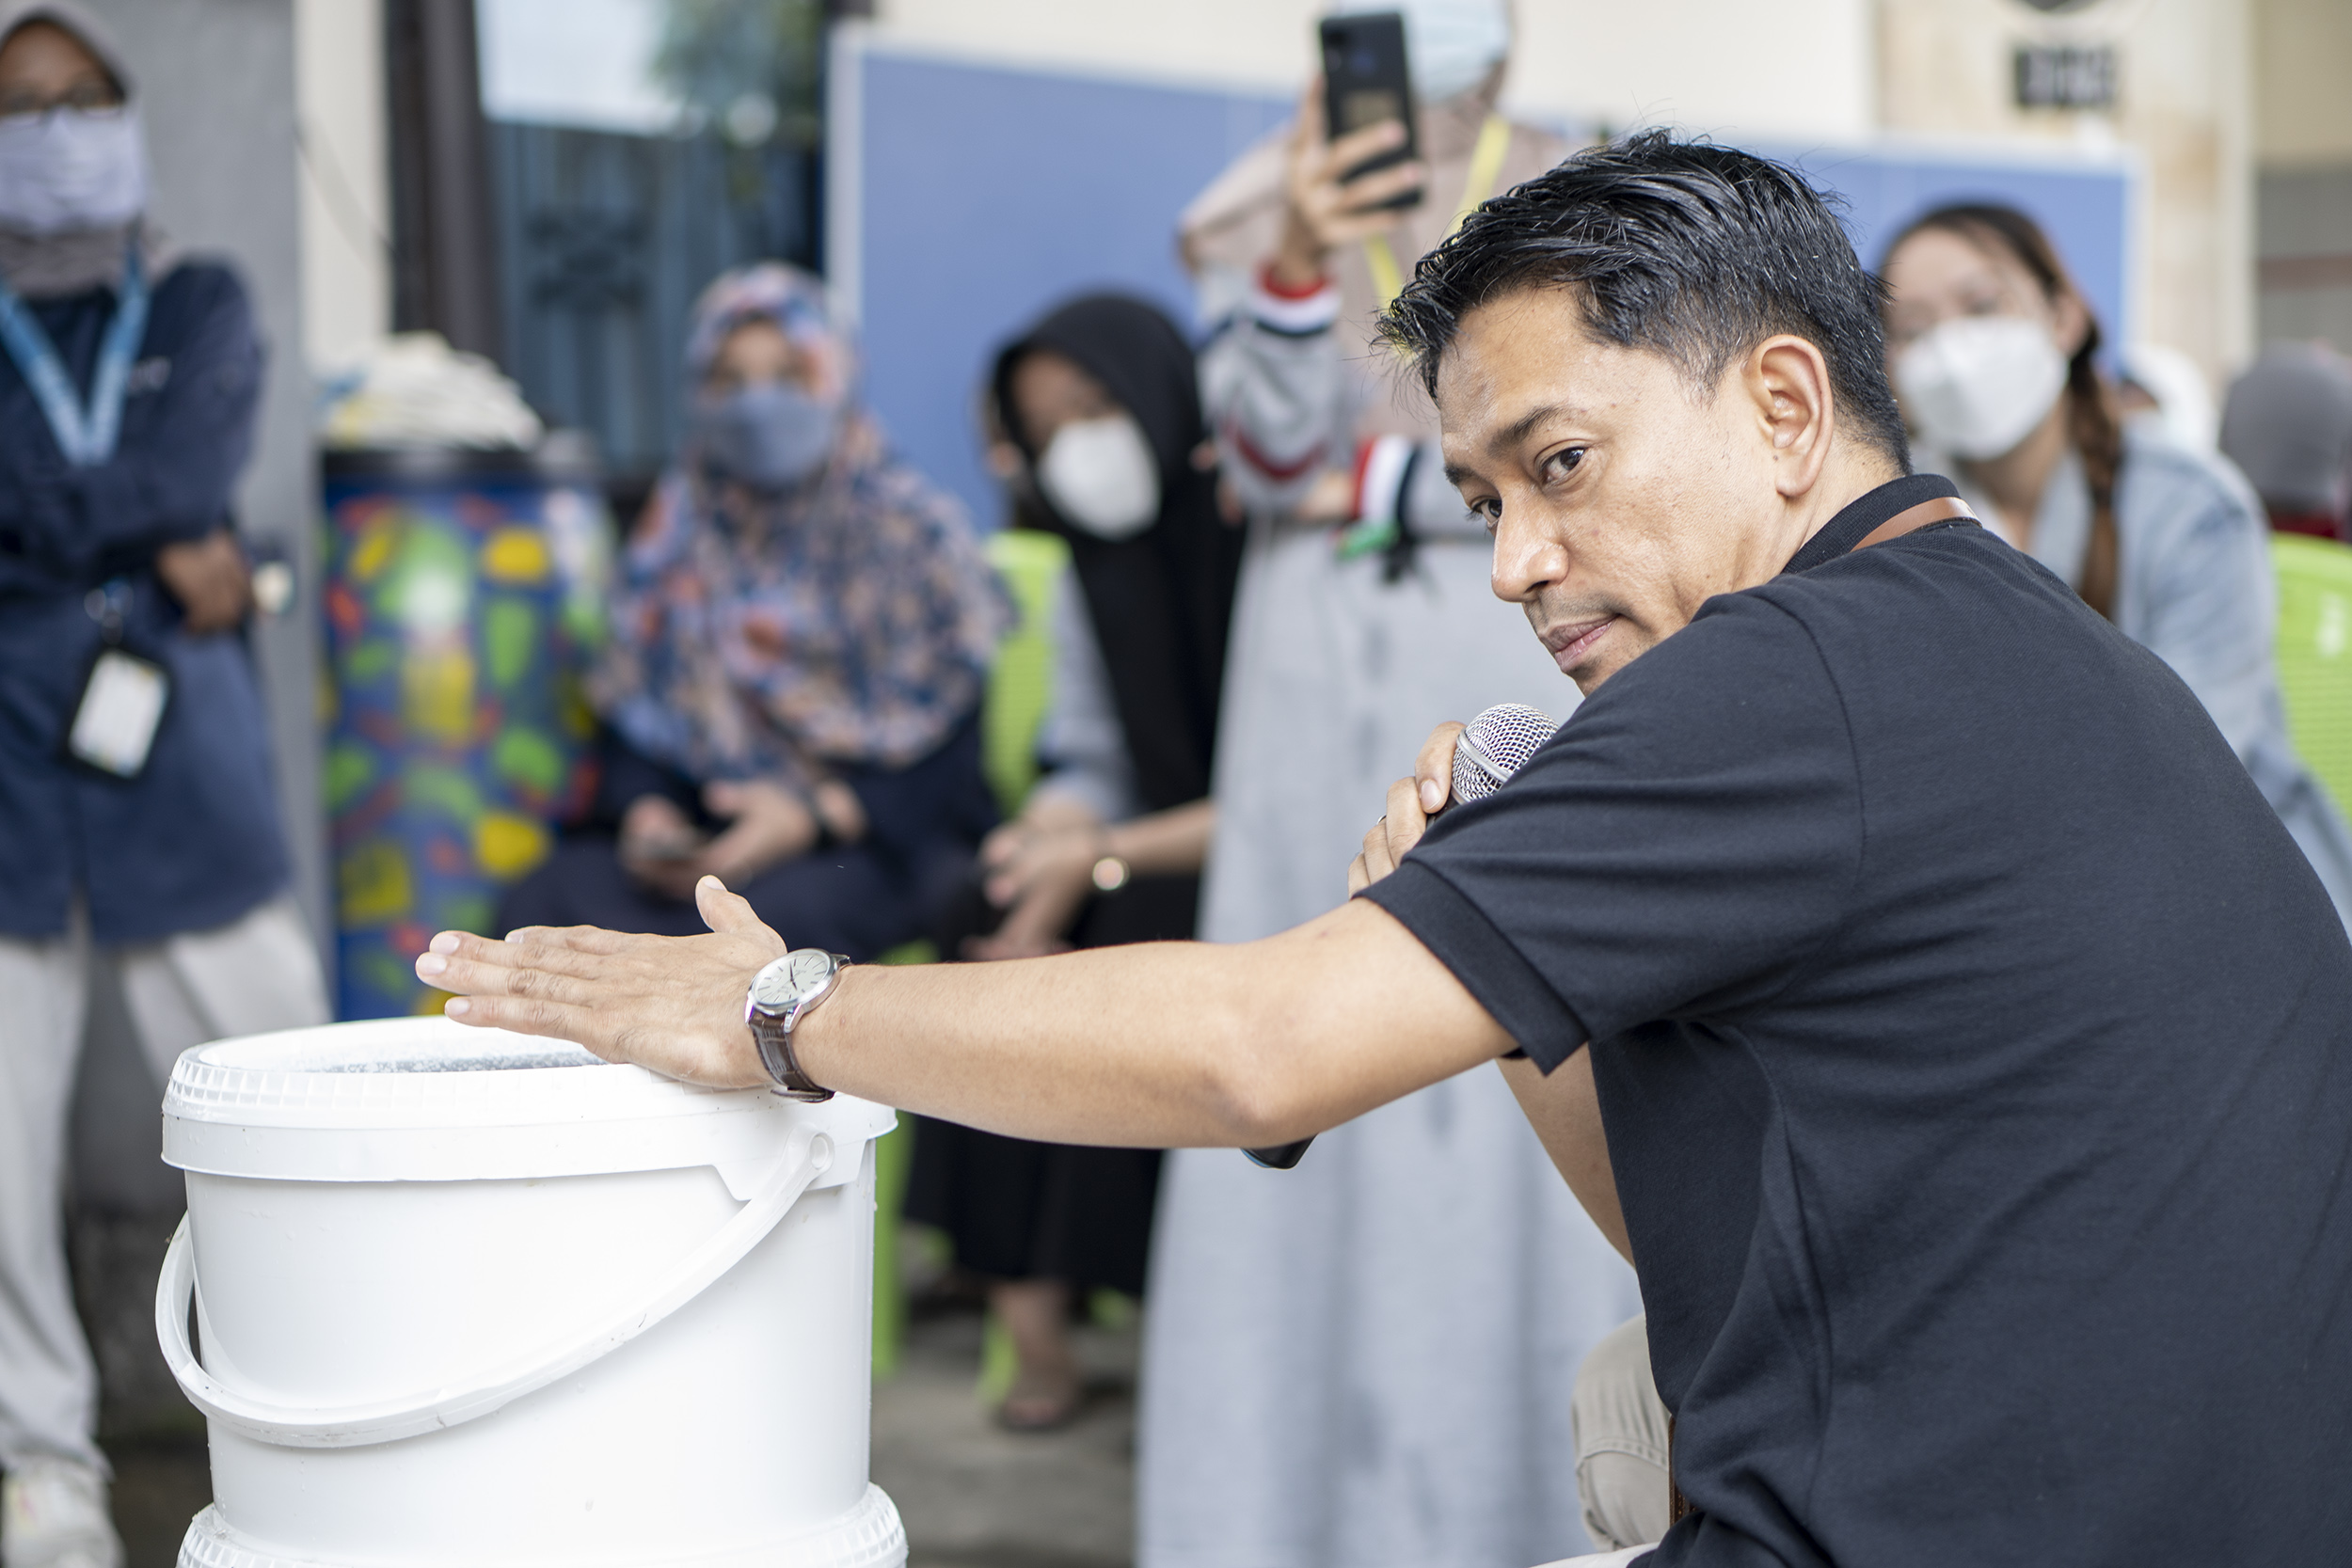 Kanwil DJKN Kaltimtara Bekerja Sama dengan Kanwil BRI Banjarmasin, Gelar Sosialisasi "Kampung Edukasi Sampah"